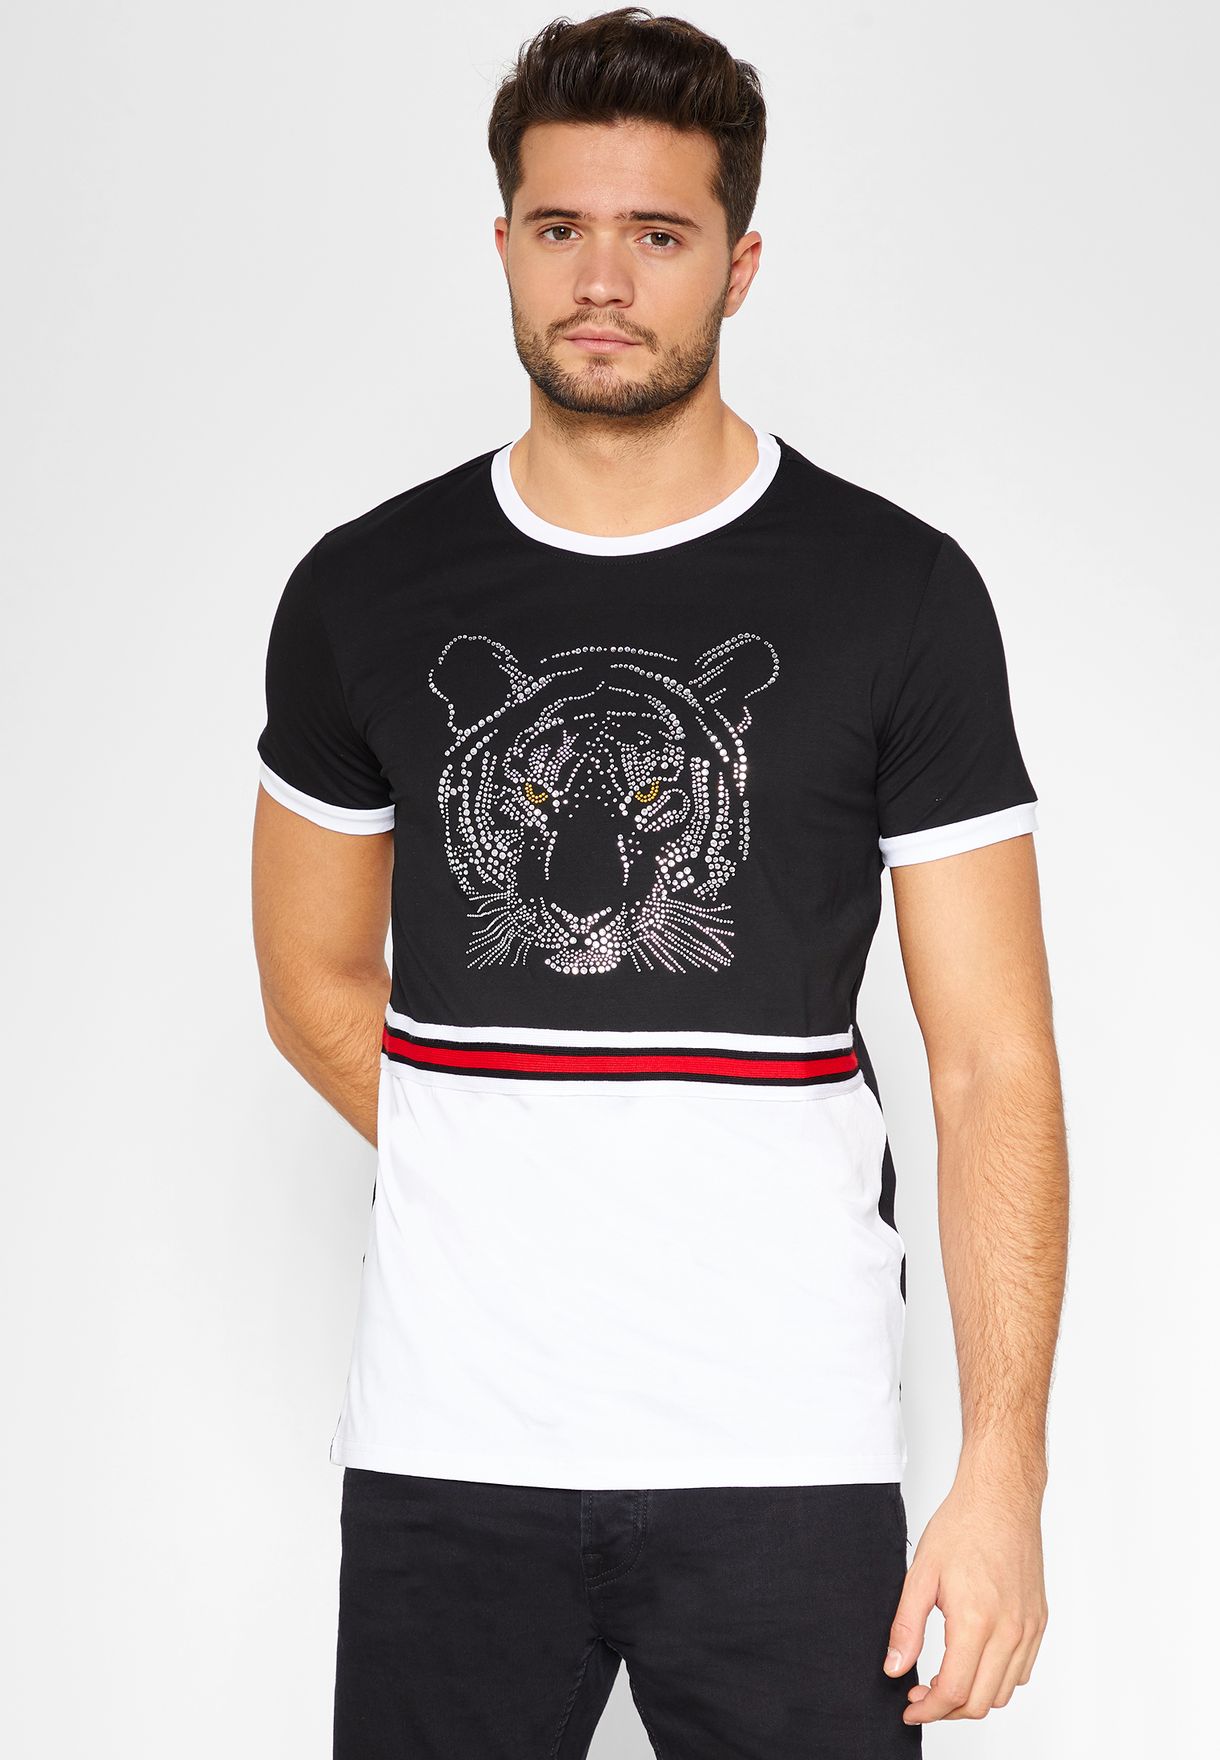 tiger colour shirt